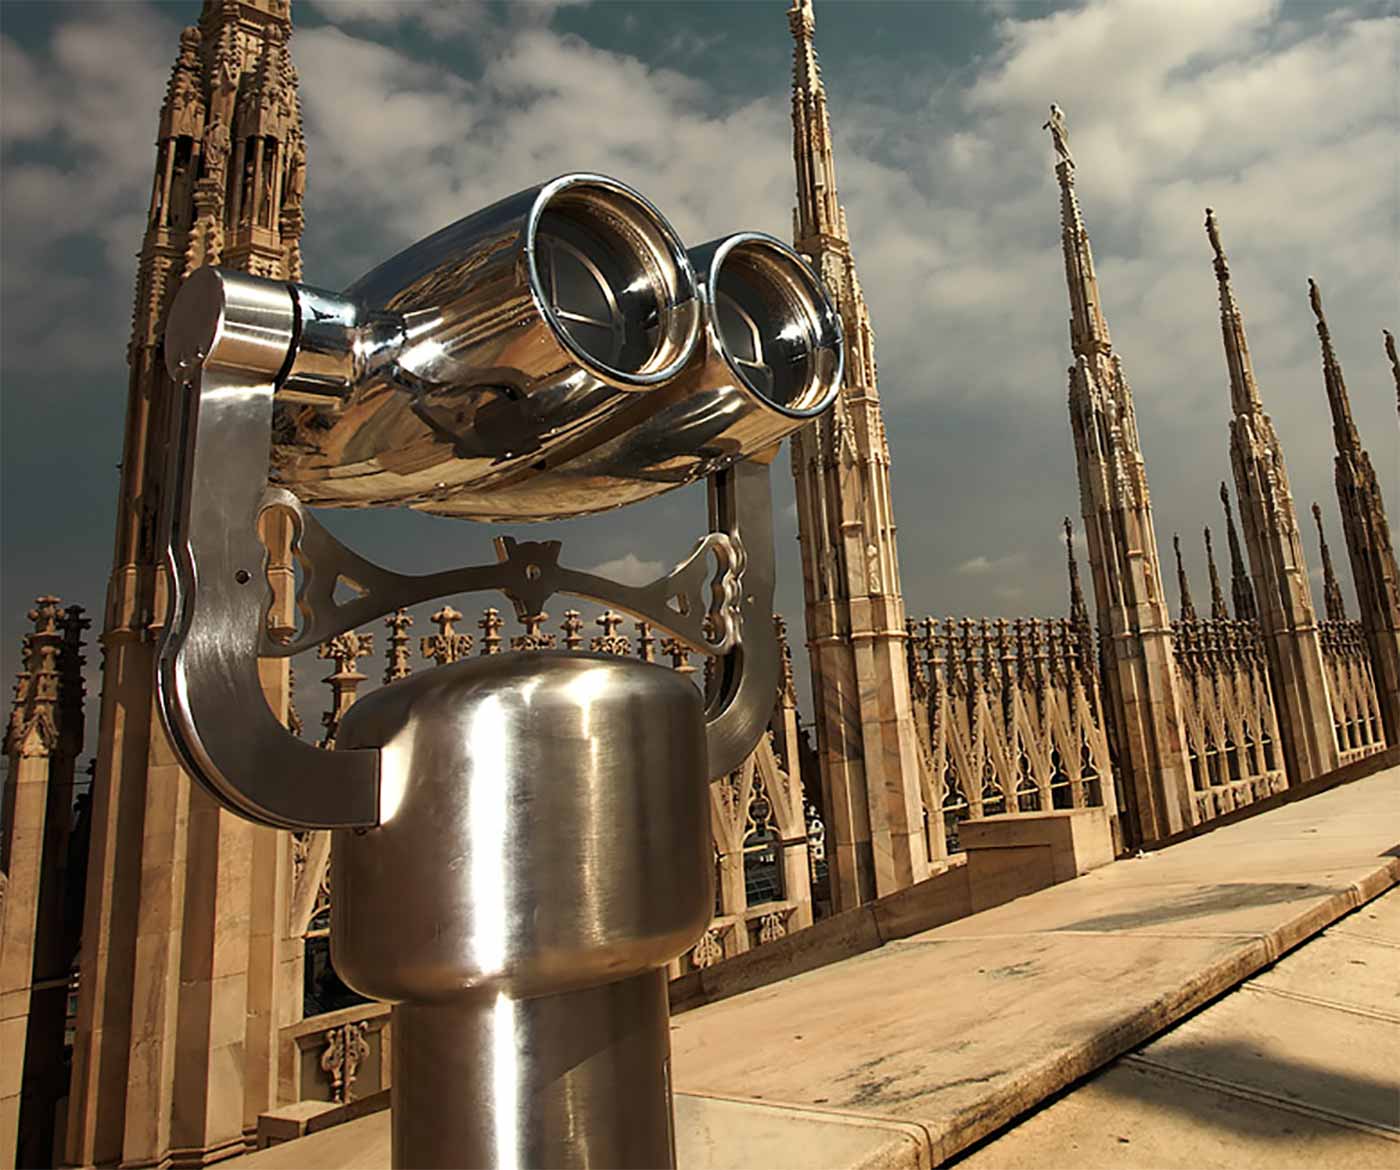 Binoculars at Duomo roof